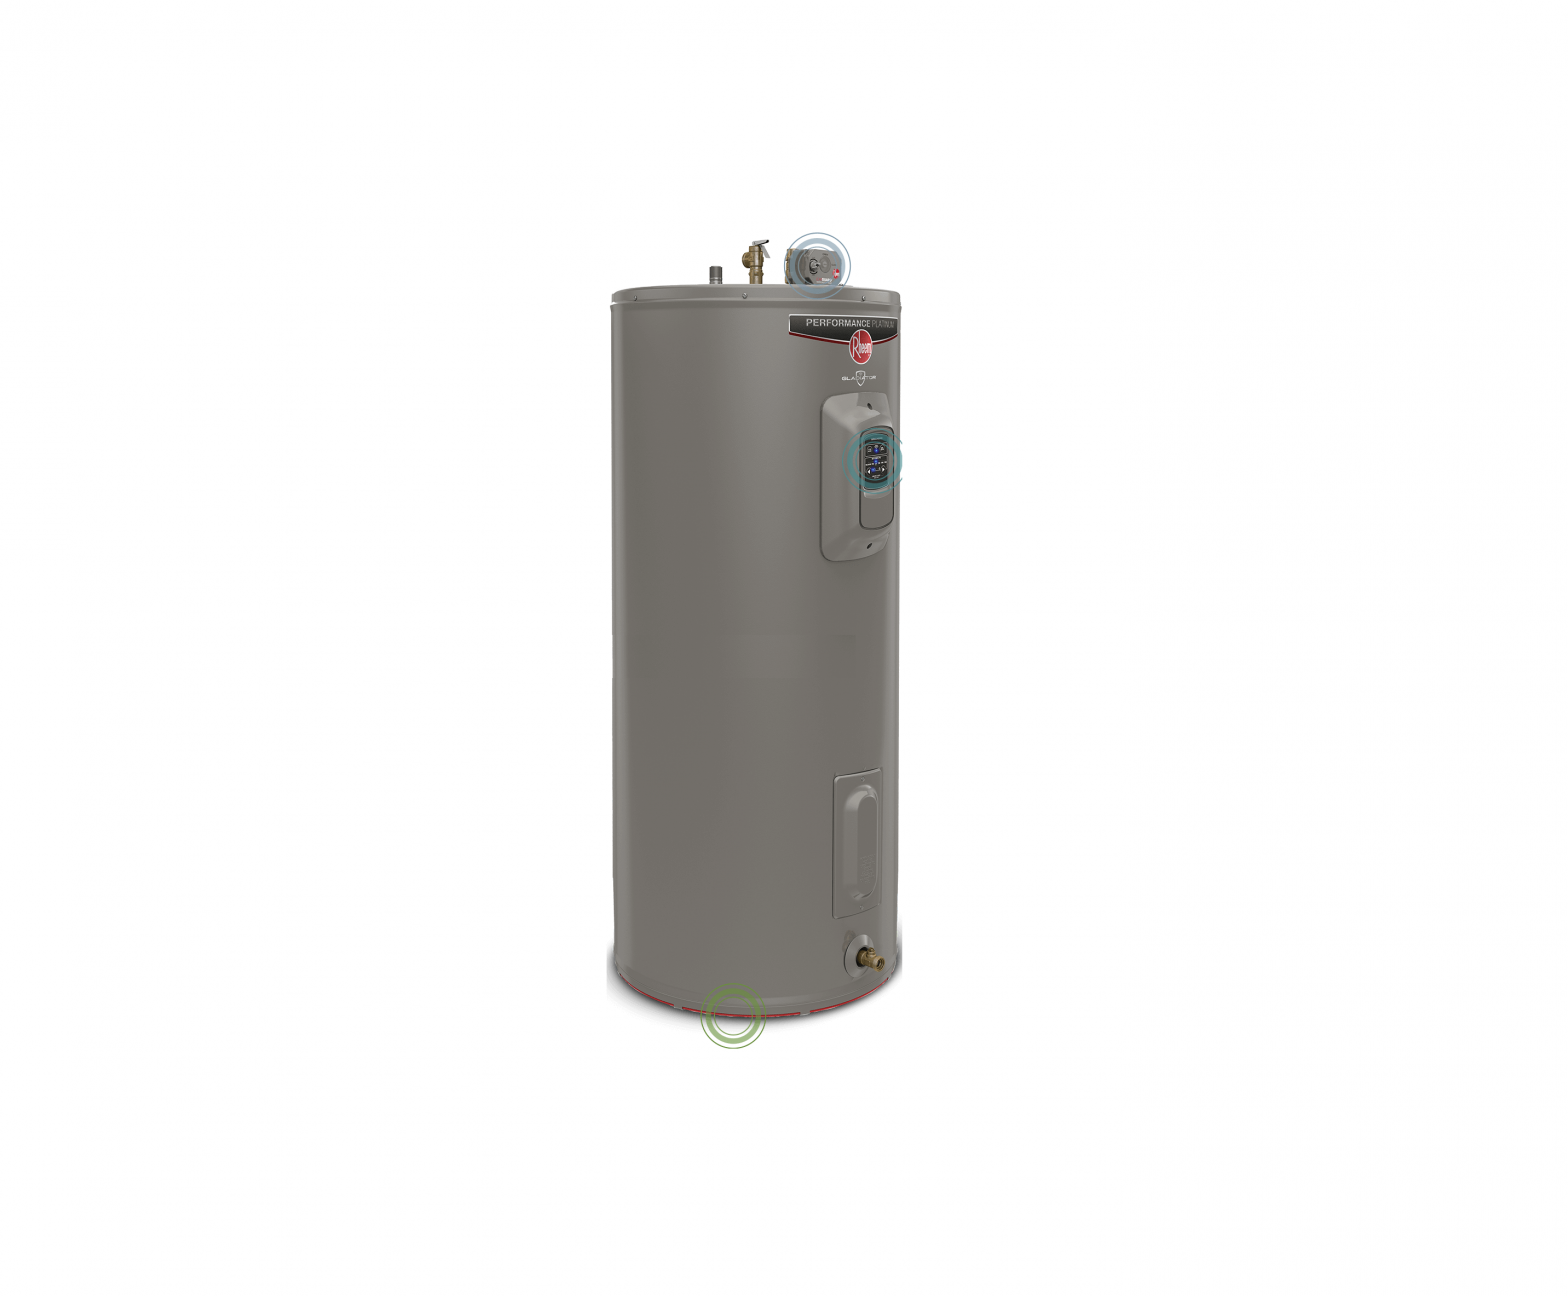 Rheem Performance Platinum Gas Water Heater Instructions